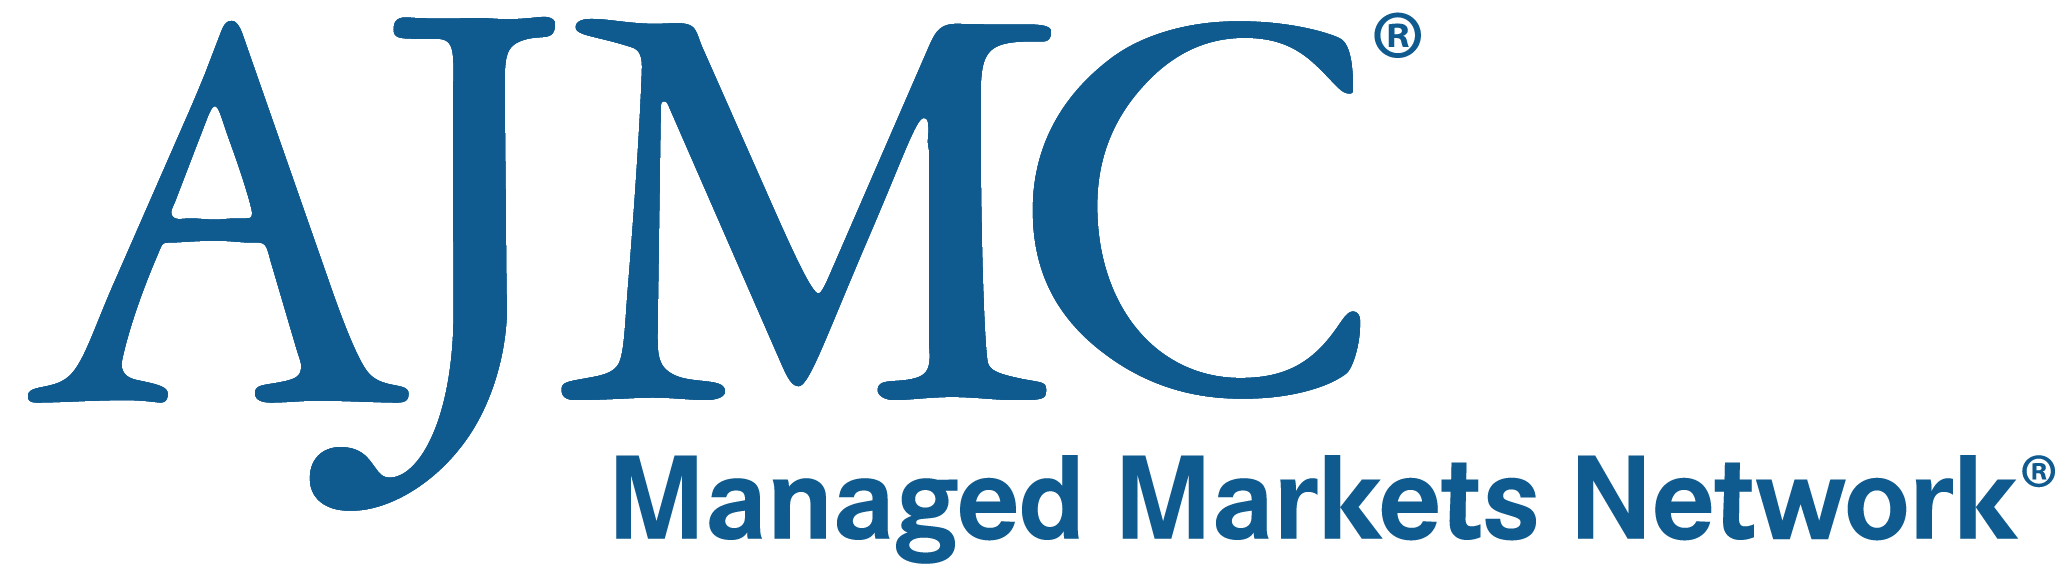 AJMC_MMN logo